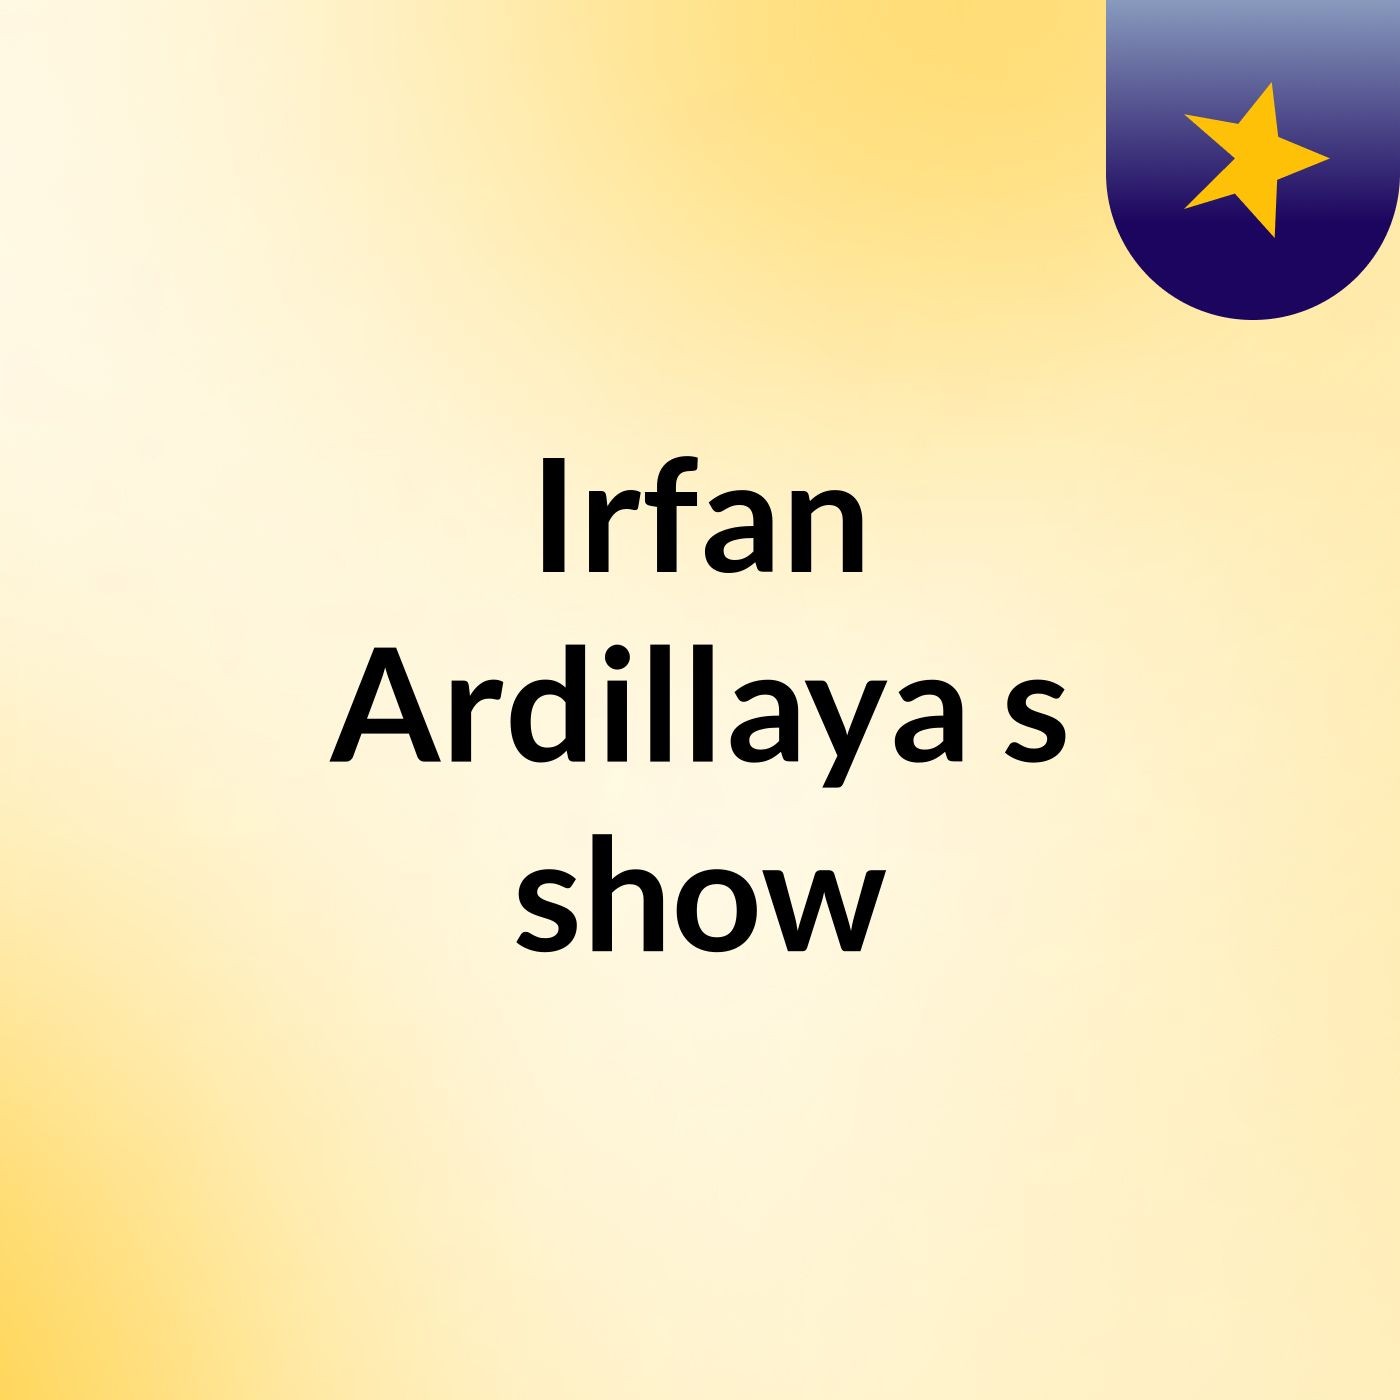 Irfan Ardillaya's show